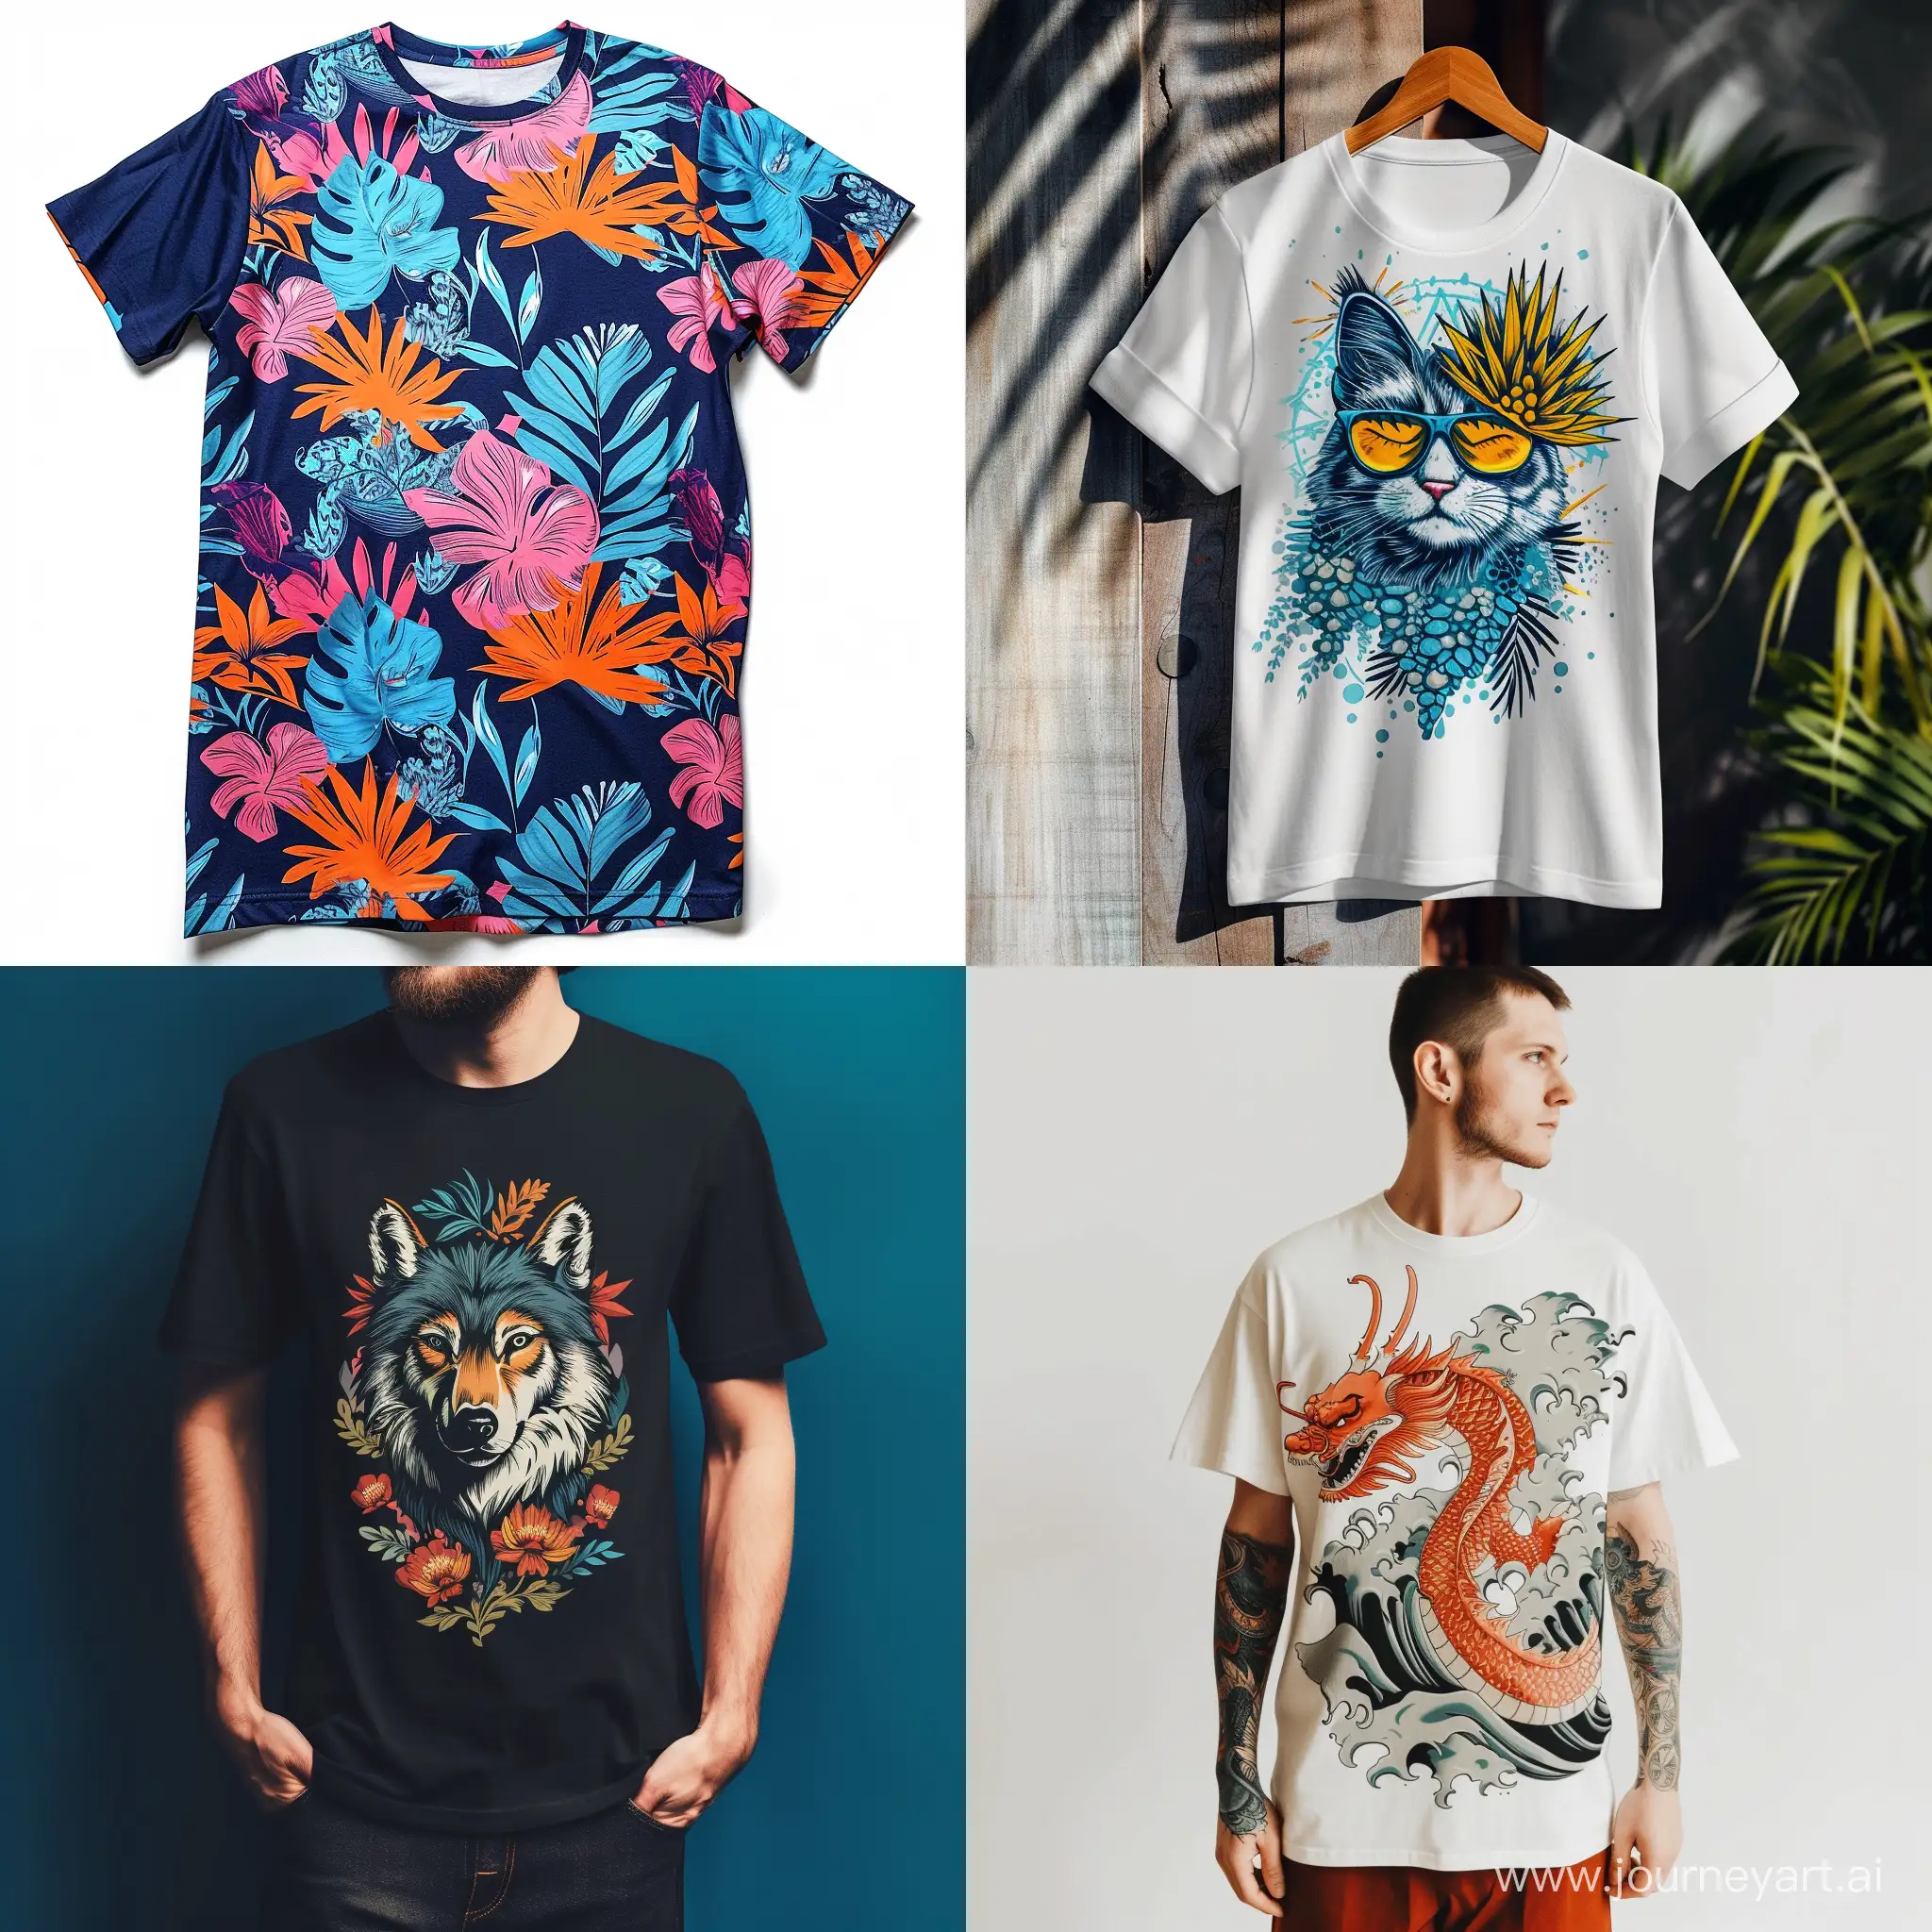 Tshirt Design, Print On Demand, Printing Website